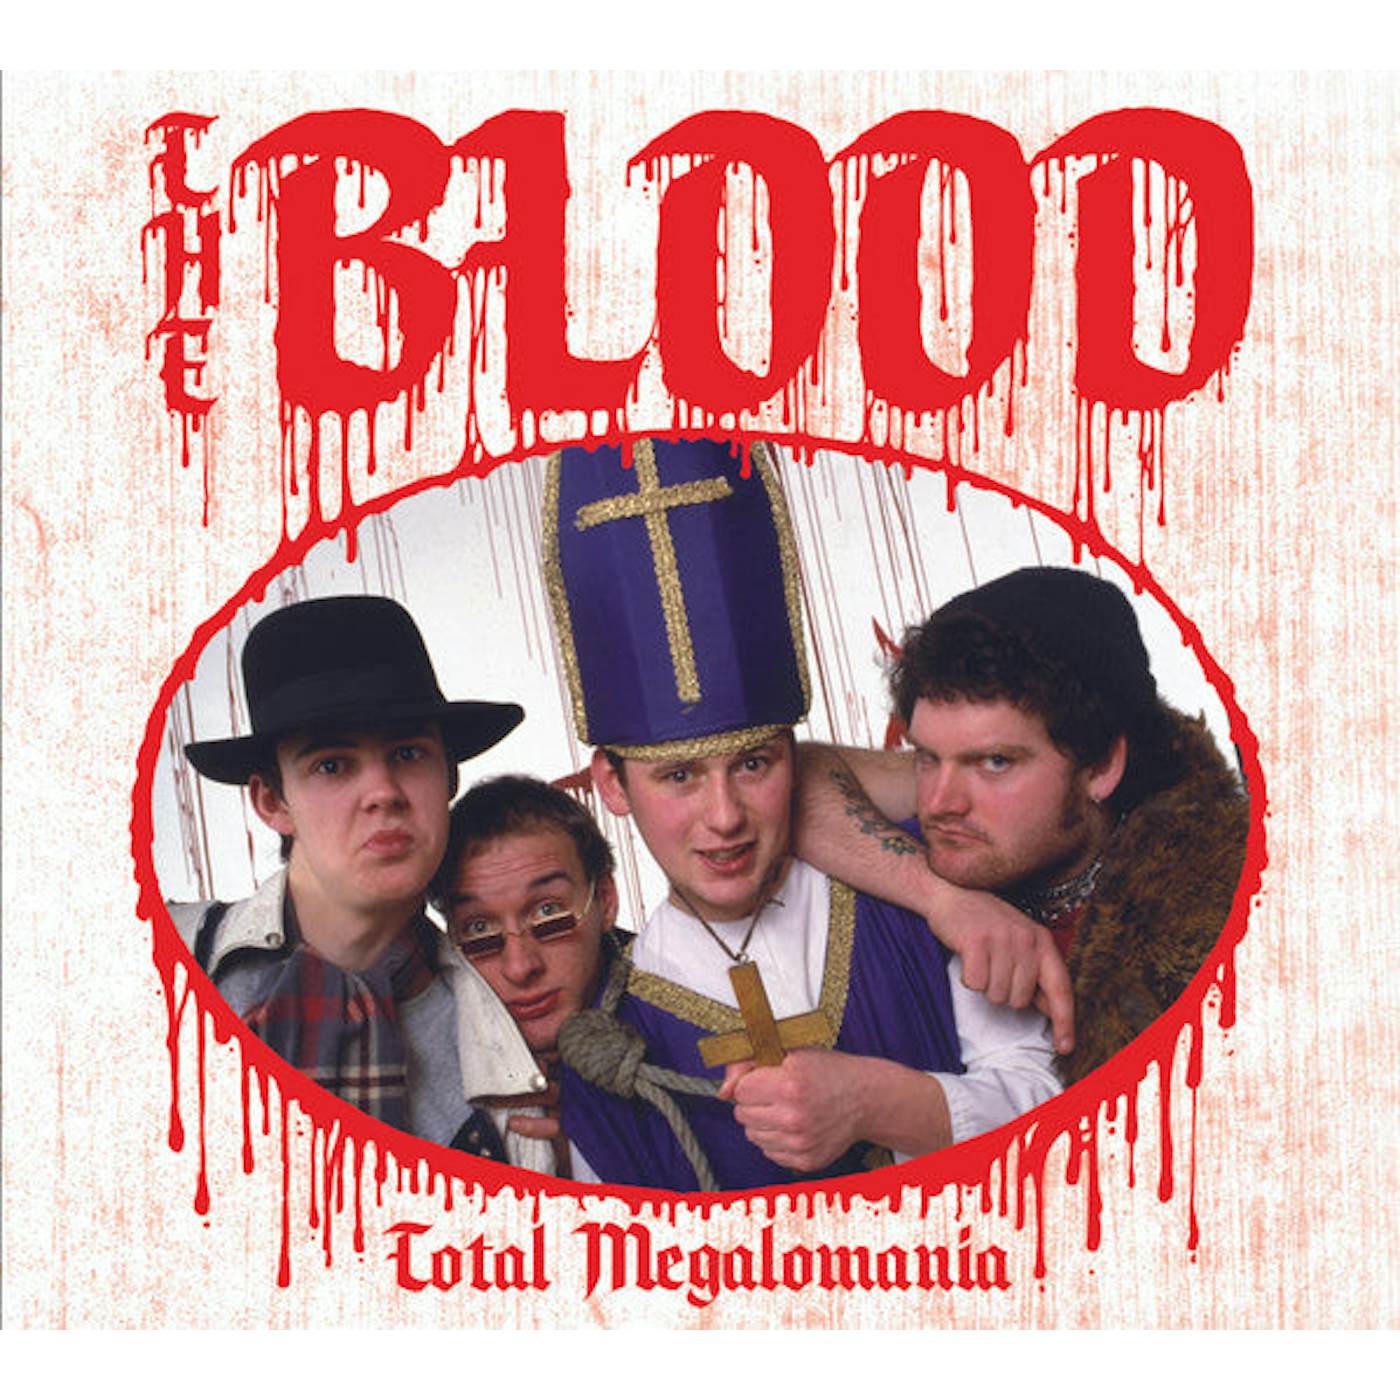 Blood CD - Total Megalomania (Digi) (+Obi Strip)